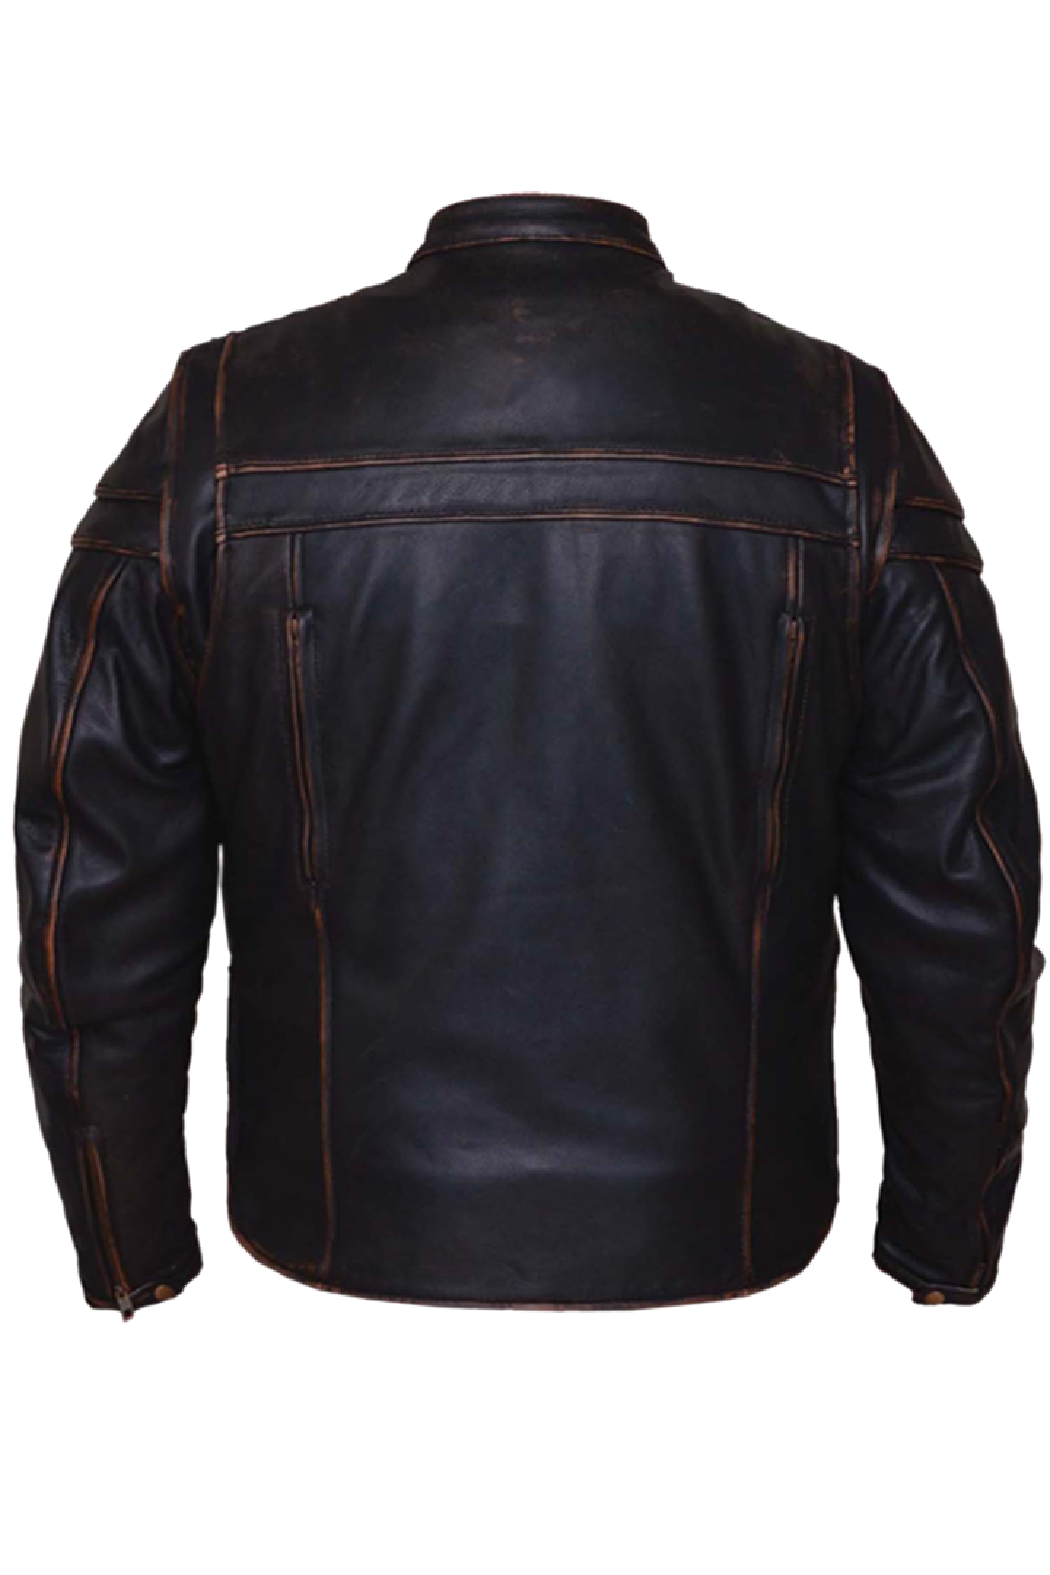 Ultra Leather Colorado Jacket